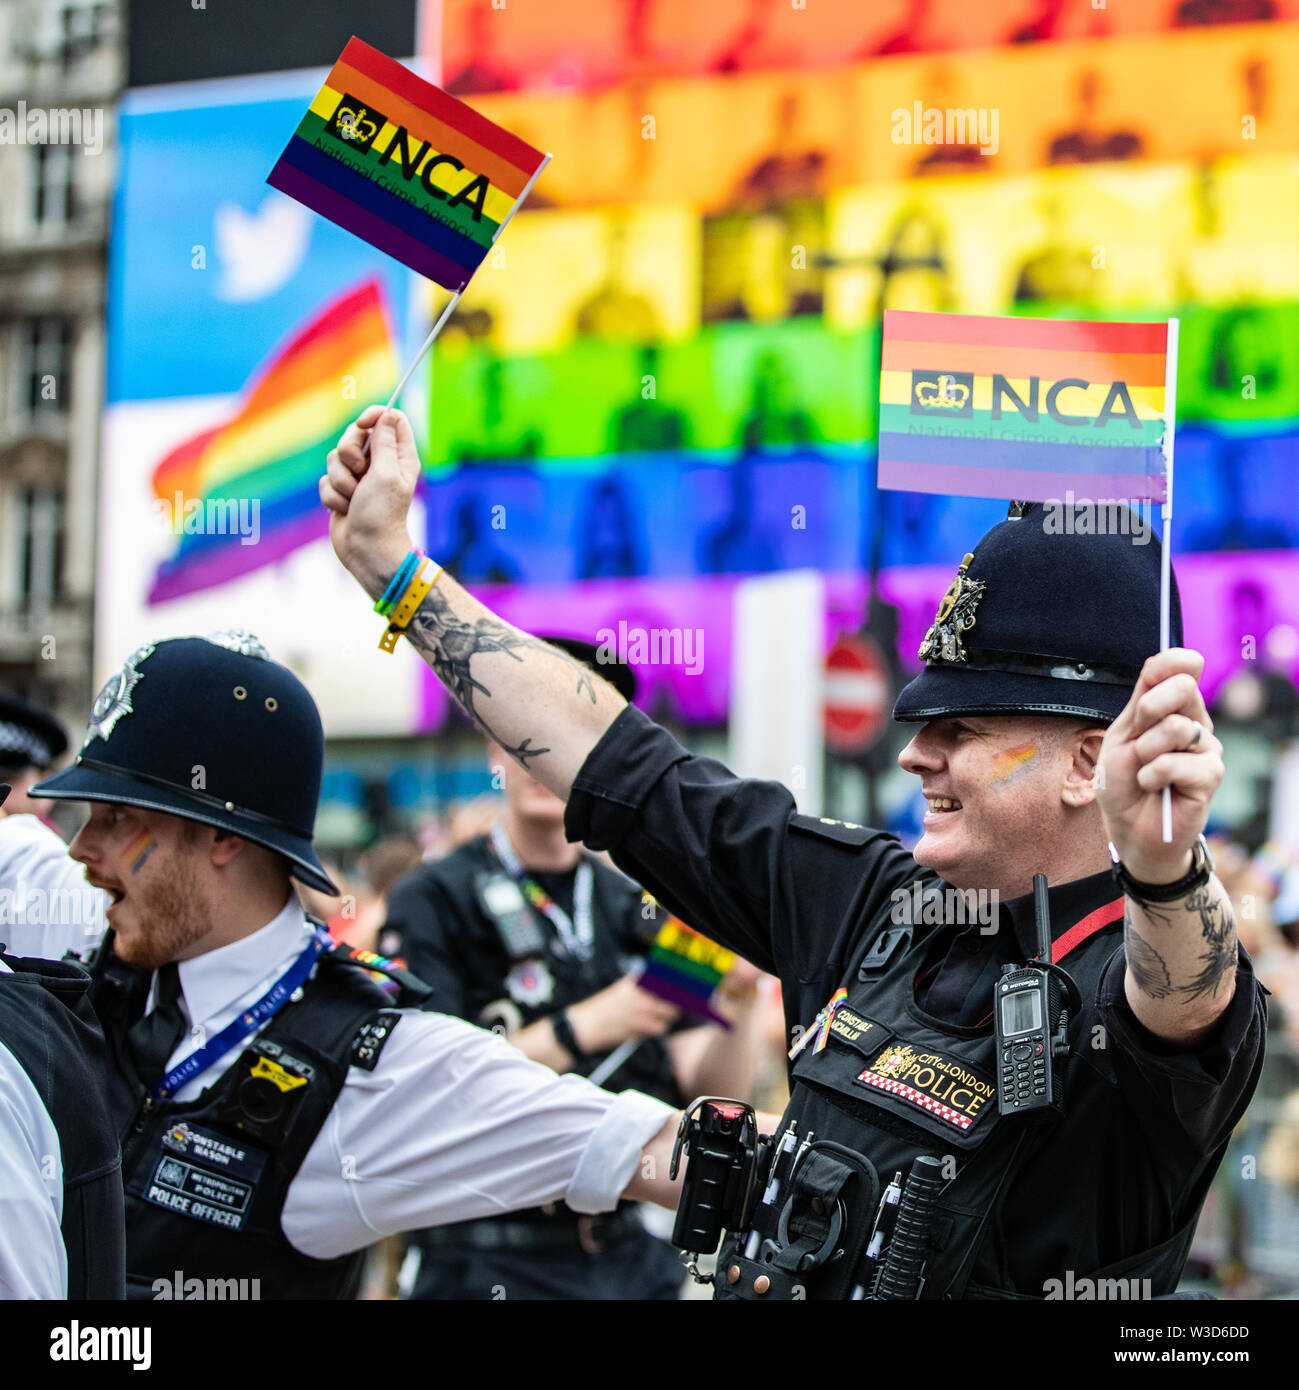 London Pride 2019 Gay Lesbica bisessuale LGBT LGBTQ Foto Stock